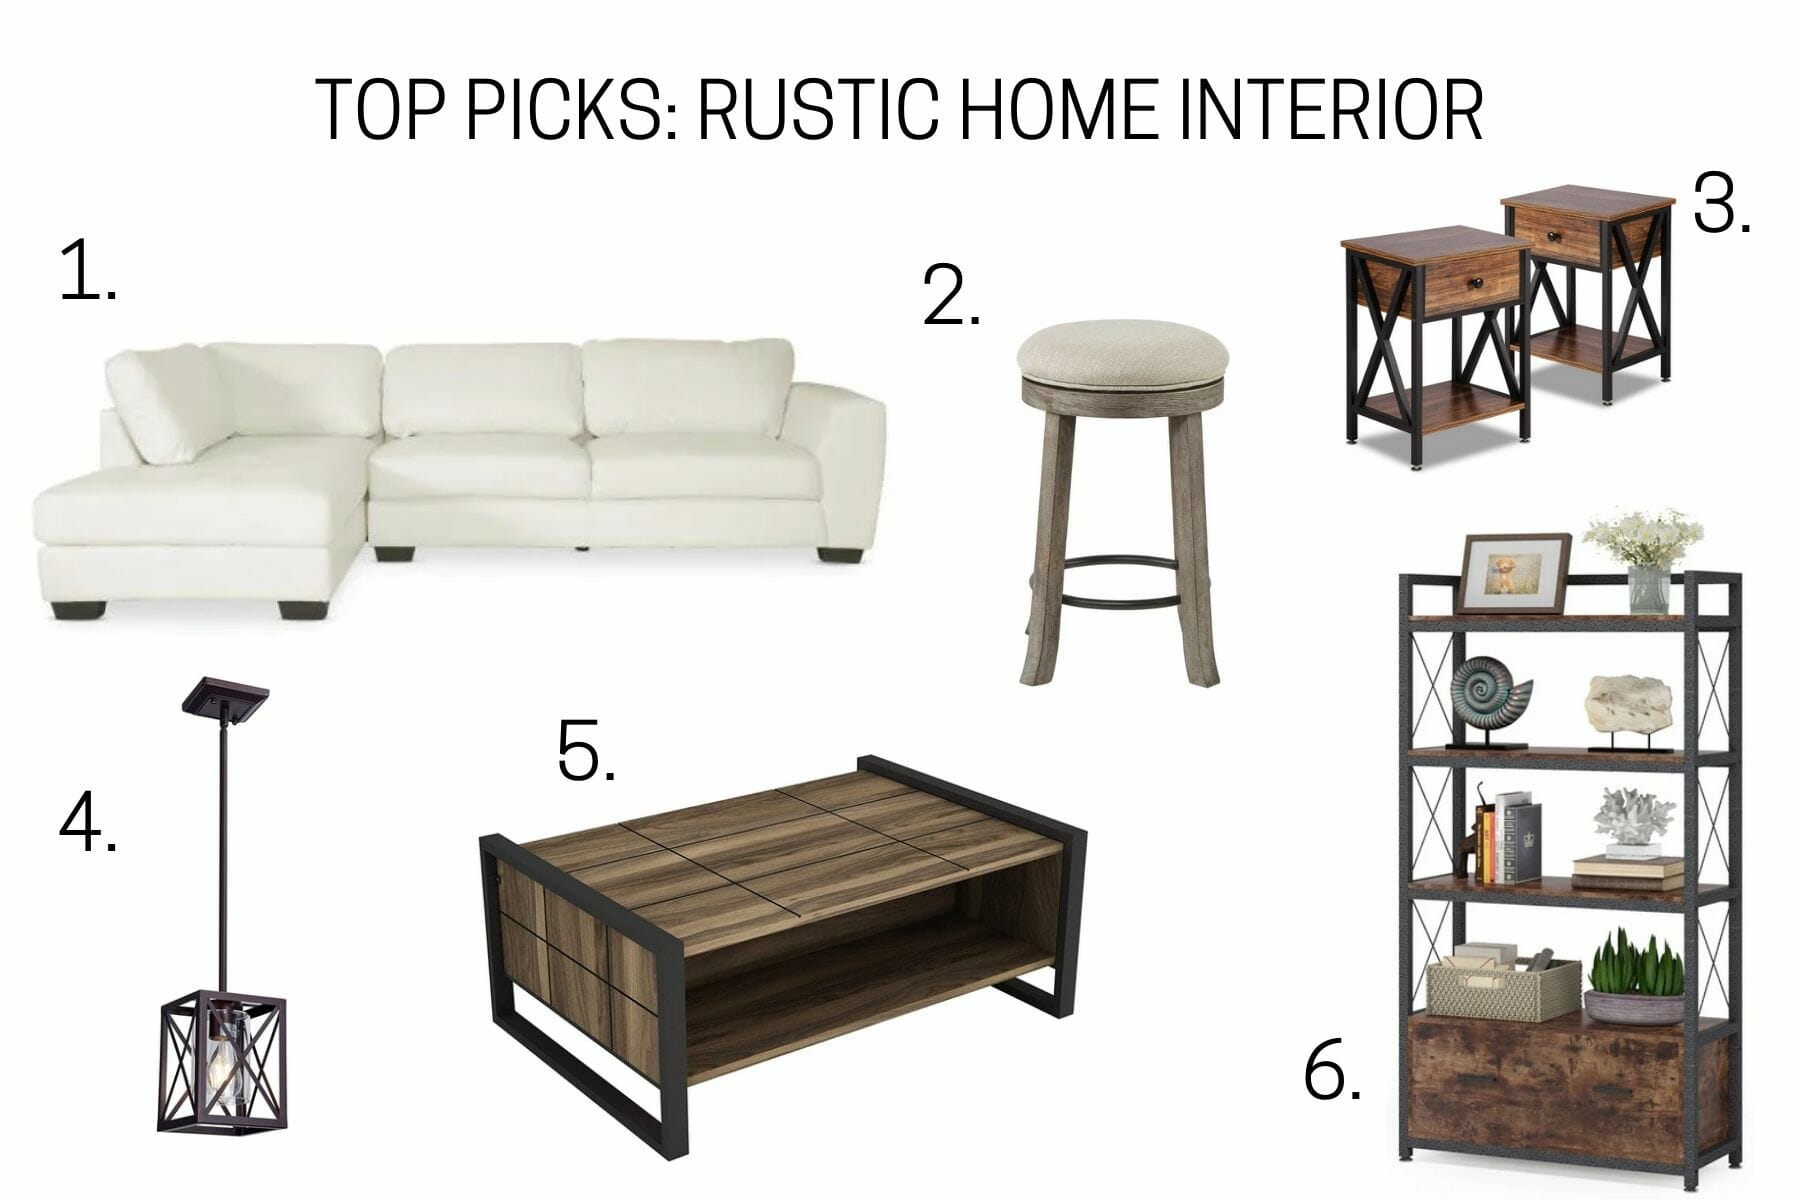 Top picks for rustic home interior design